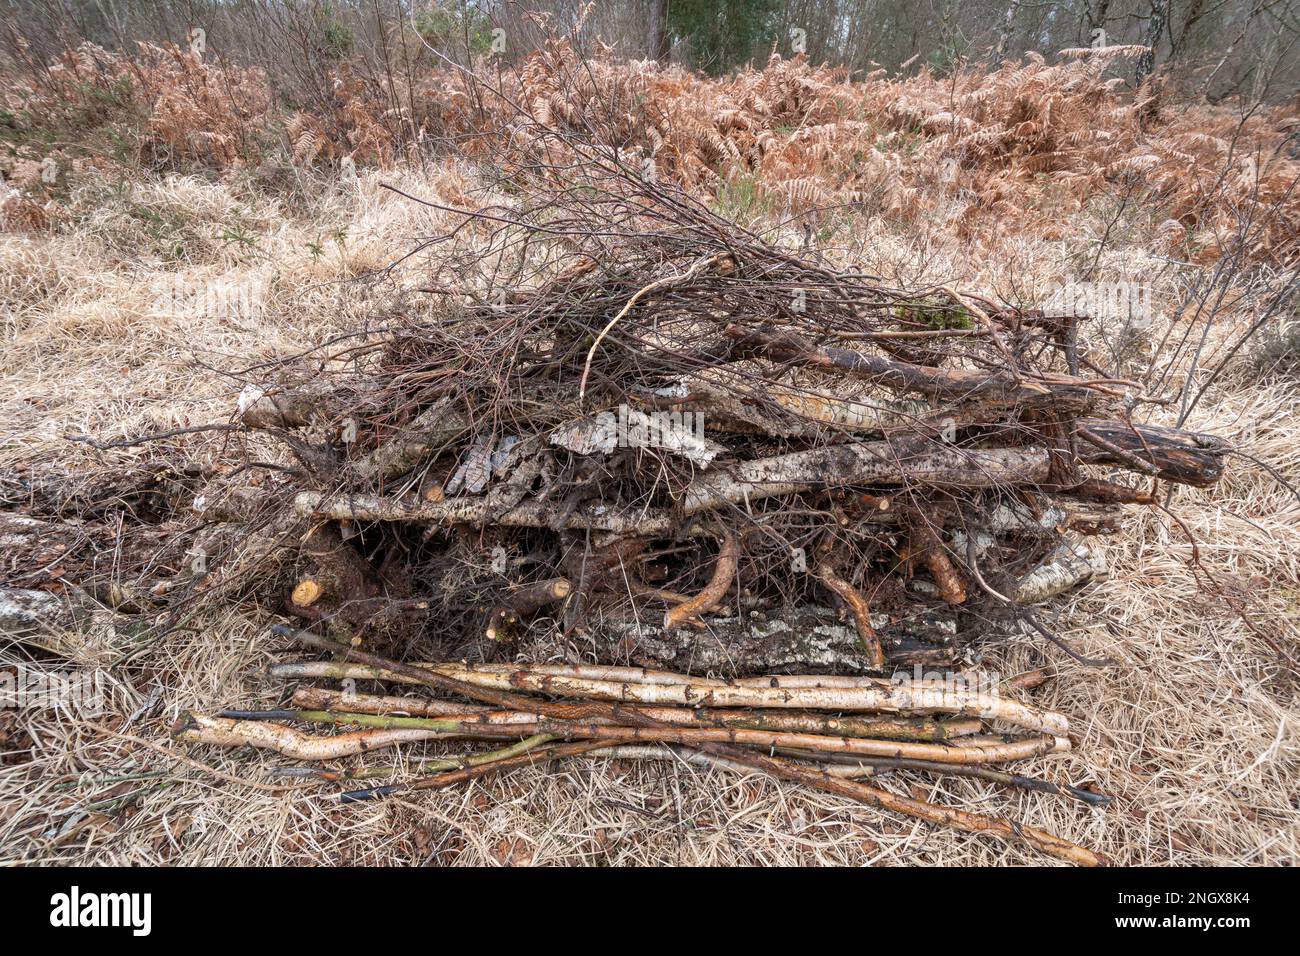 Log pile with brash on top on heathland, a habitat pile for wildlife and bugs to use, Surrey, England, UK Stock Photo